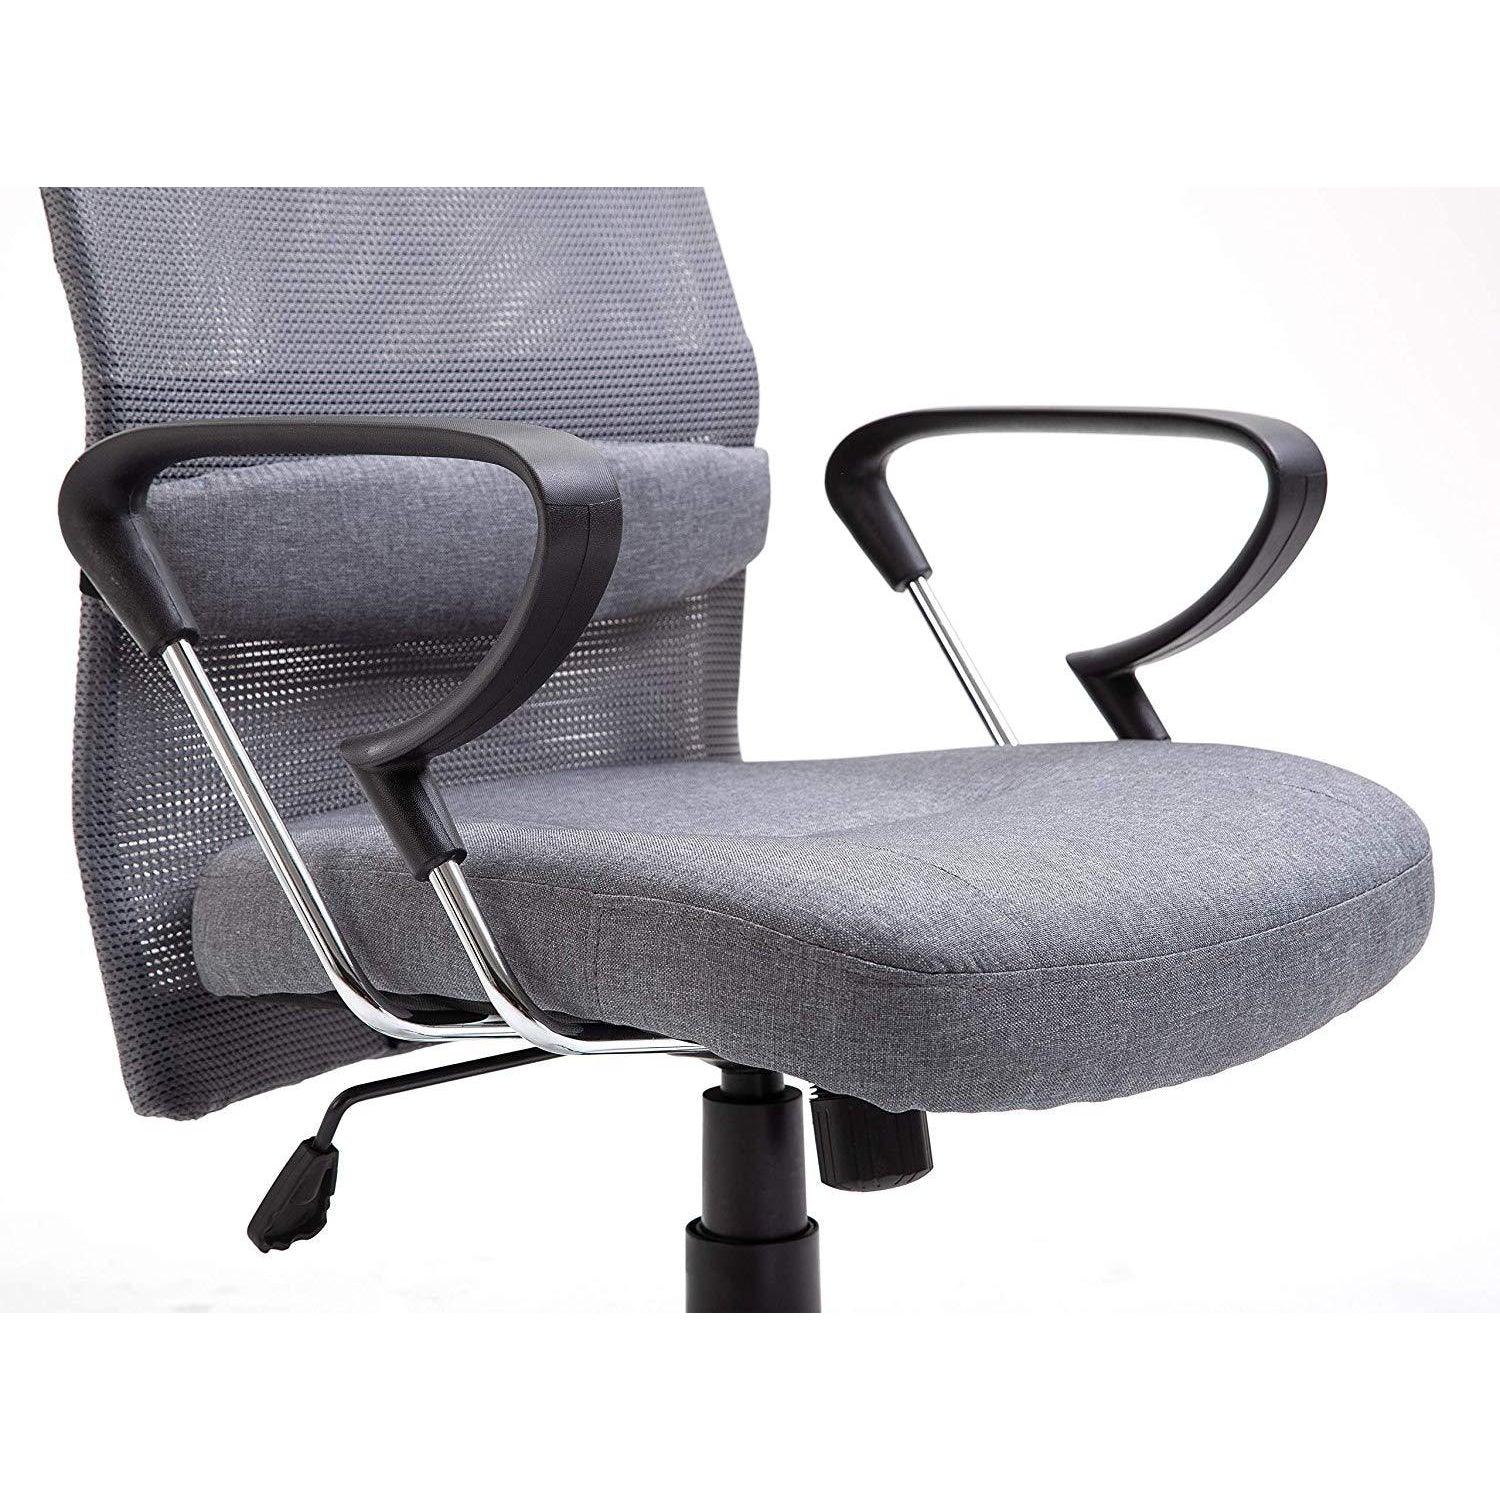 High Back Mesh Fabric Swivel Office Chair, MO57 Grey